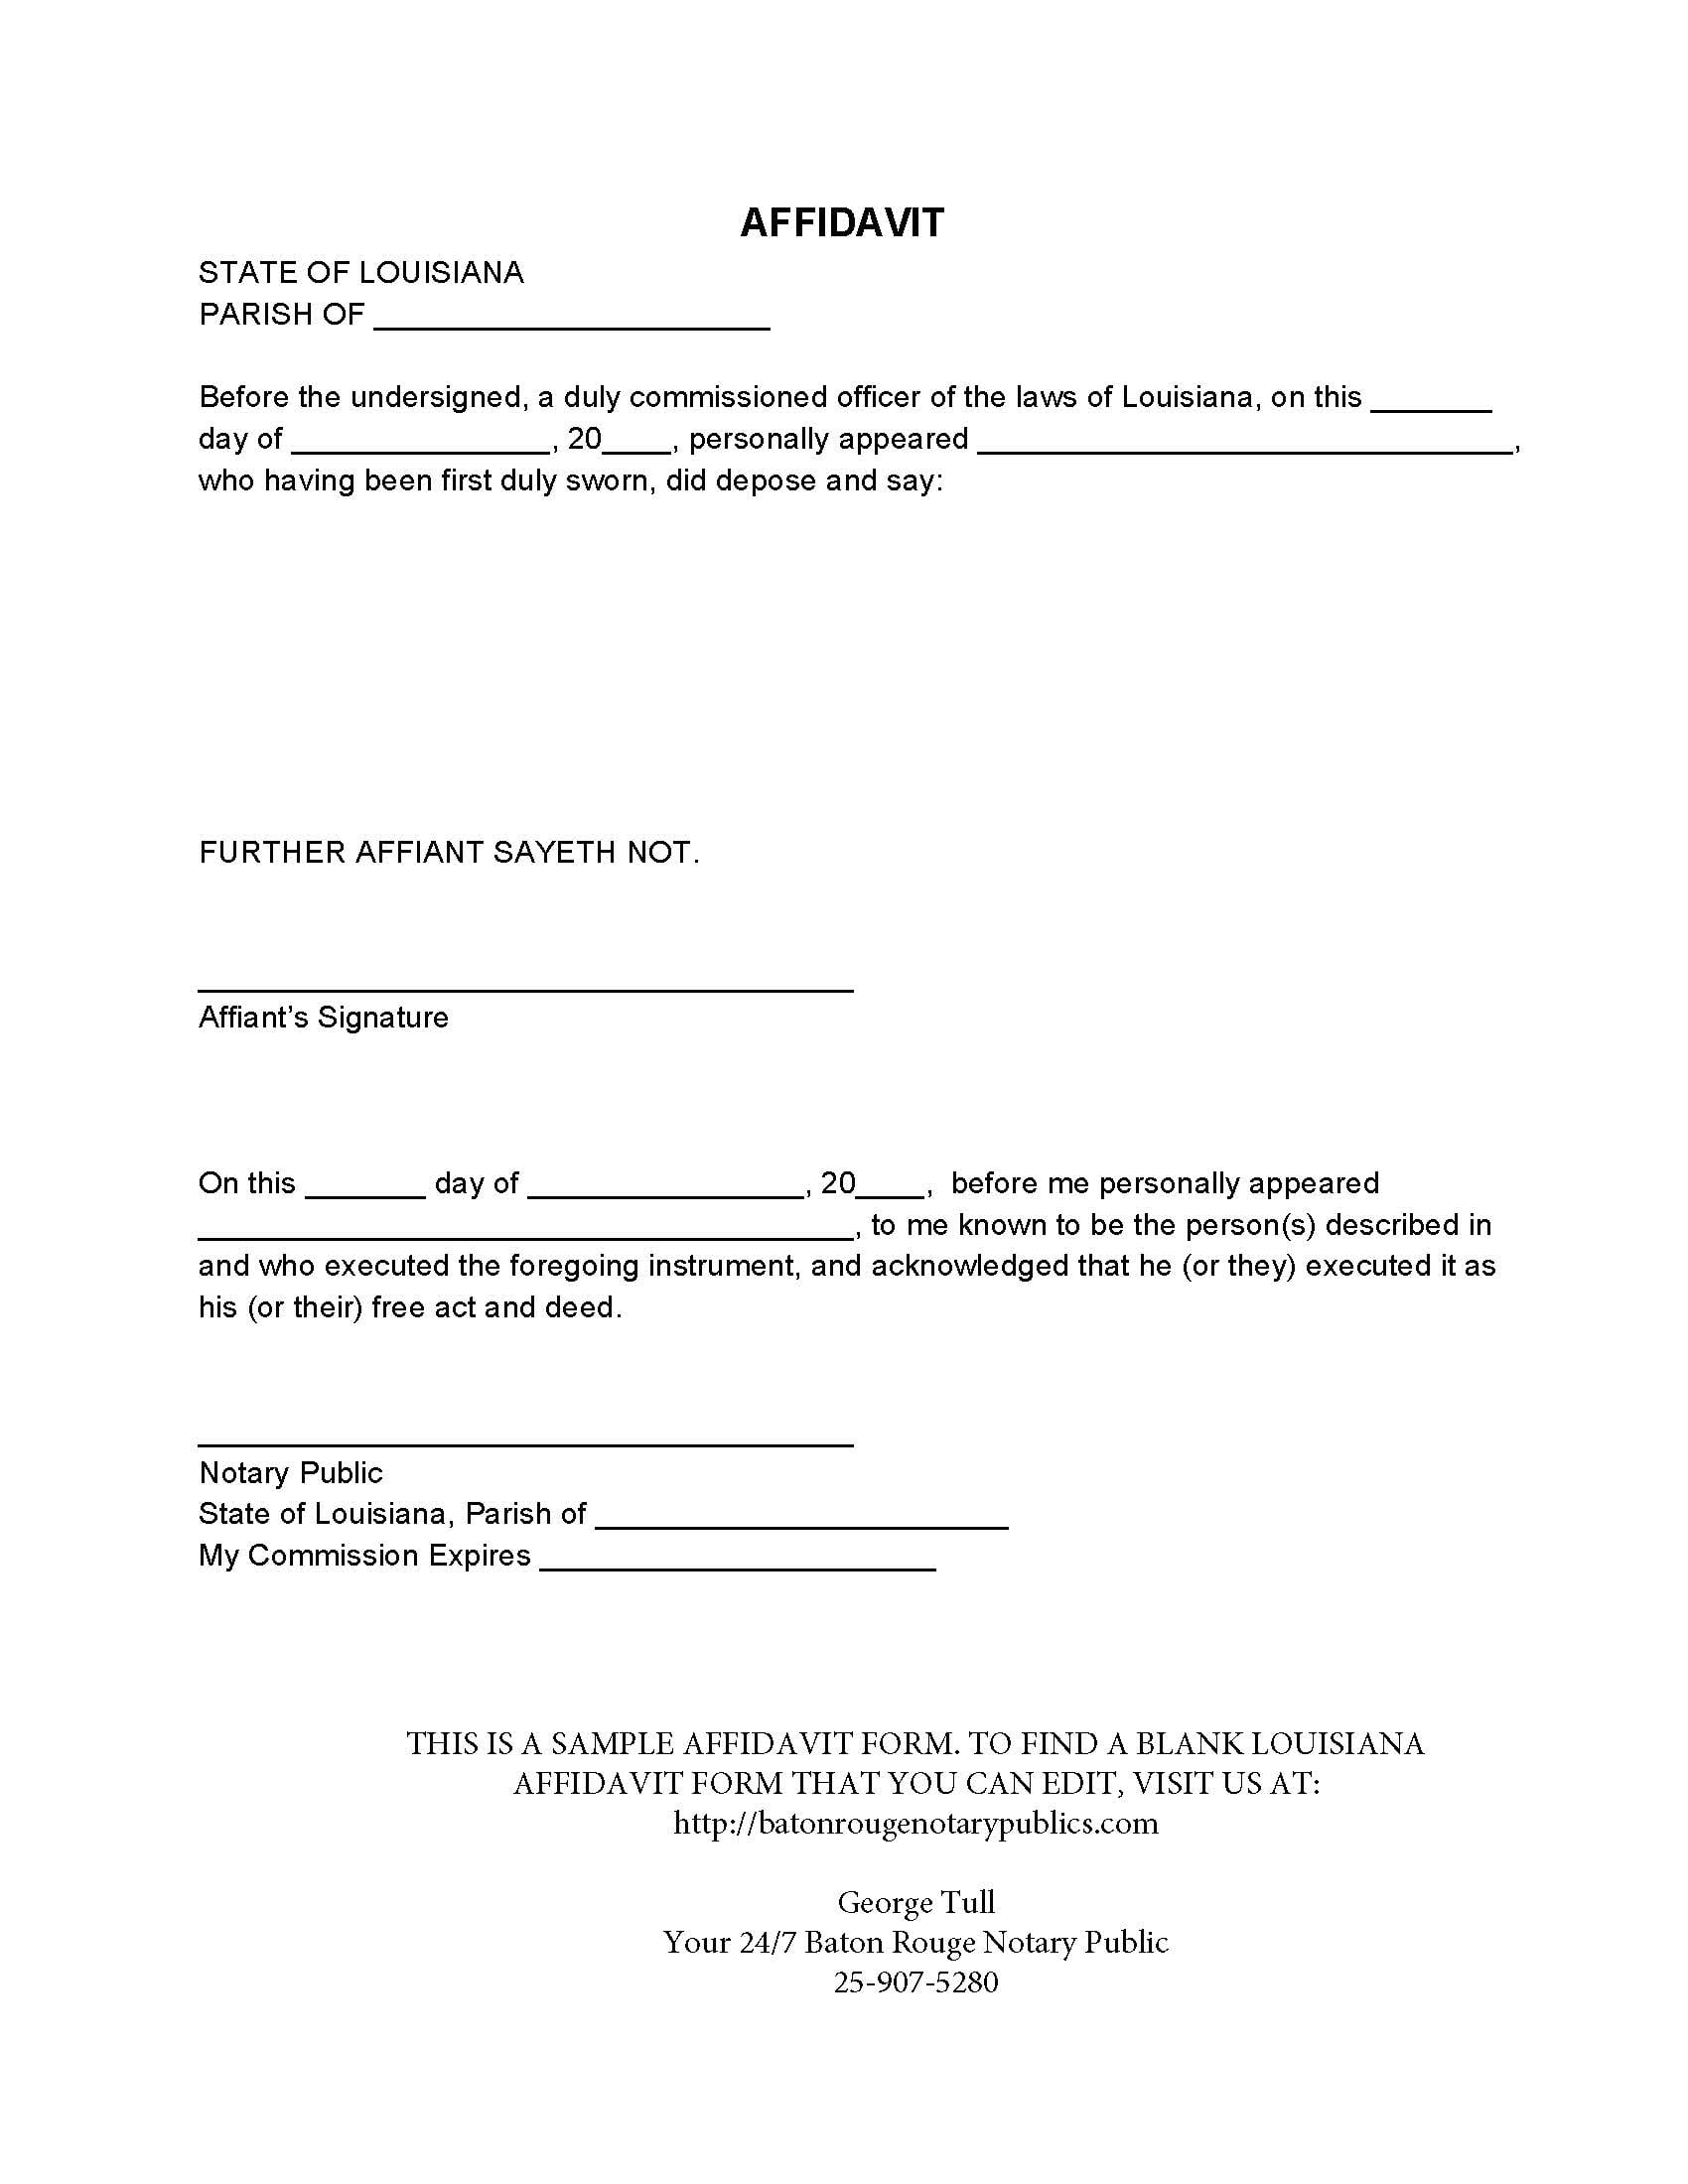 personal notarized letter of affidavit